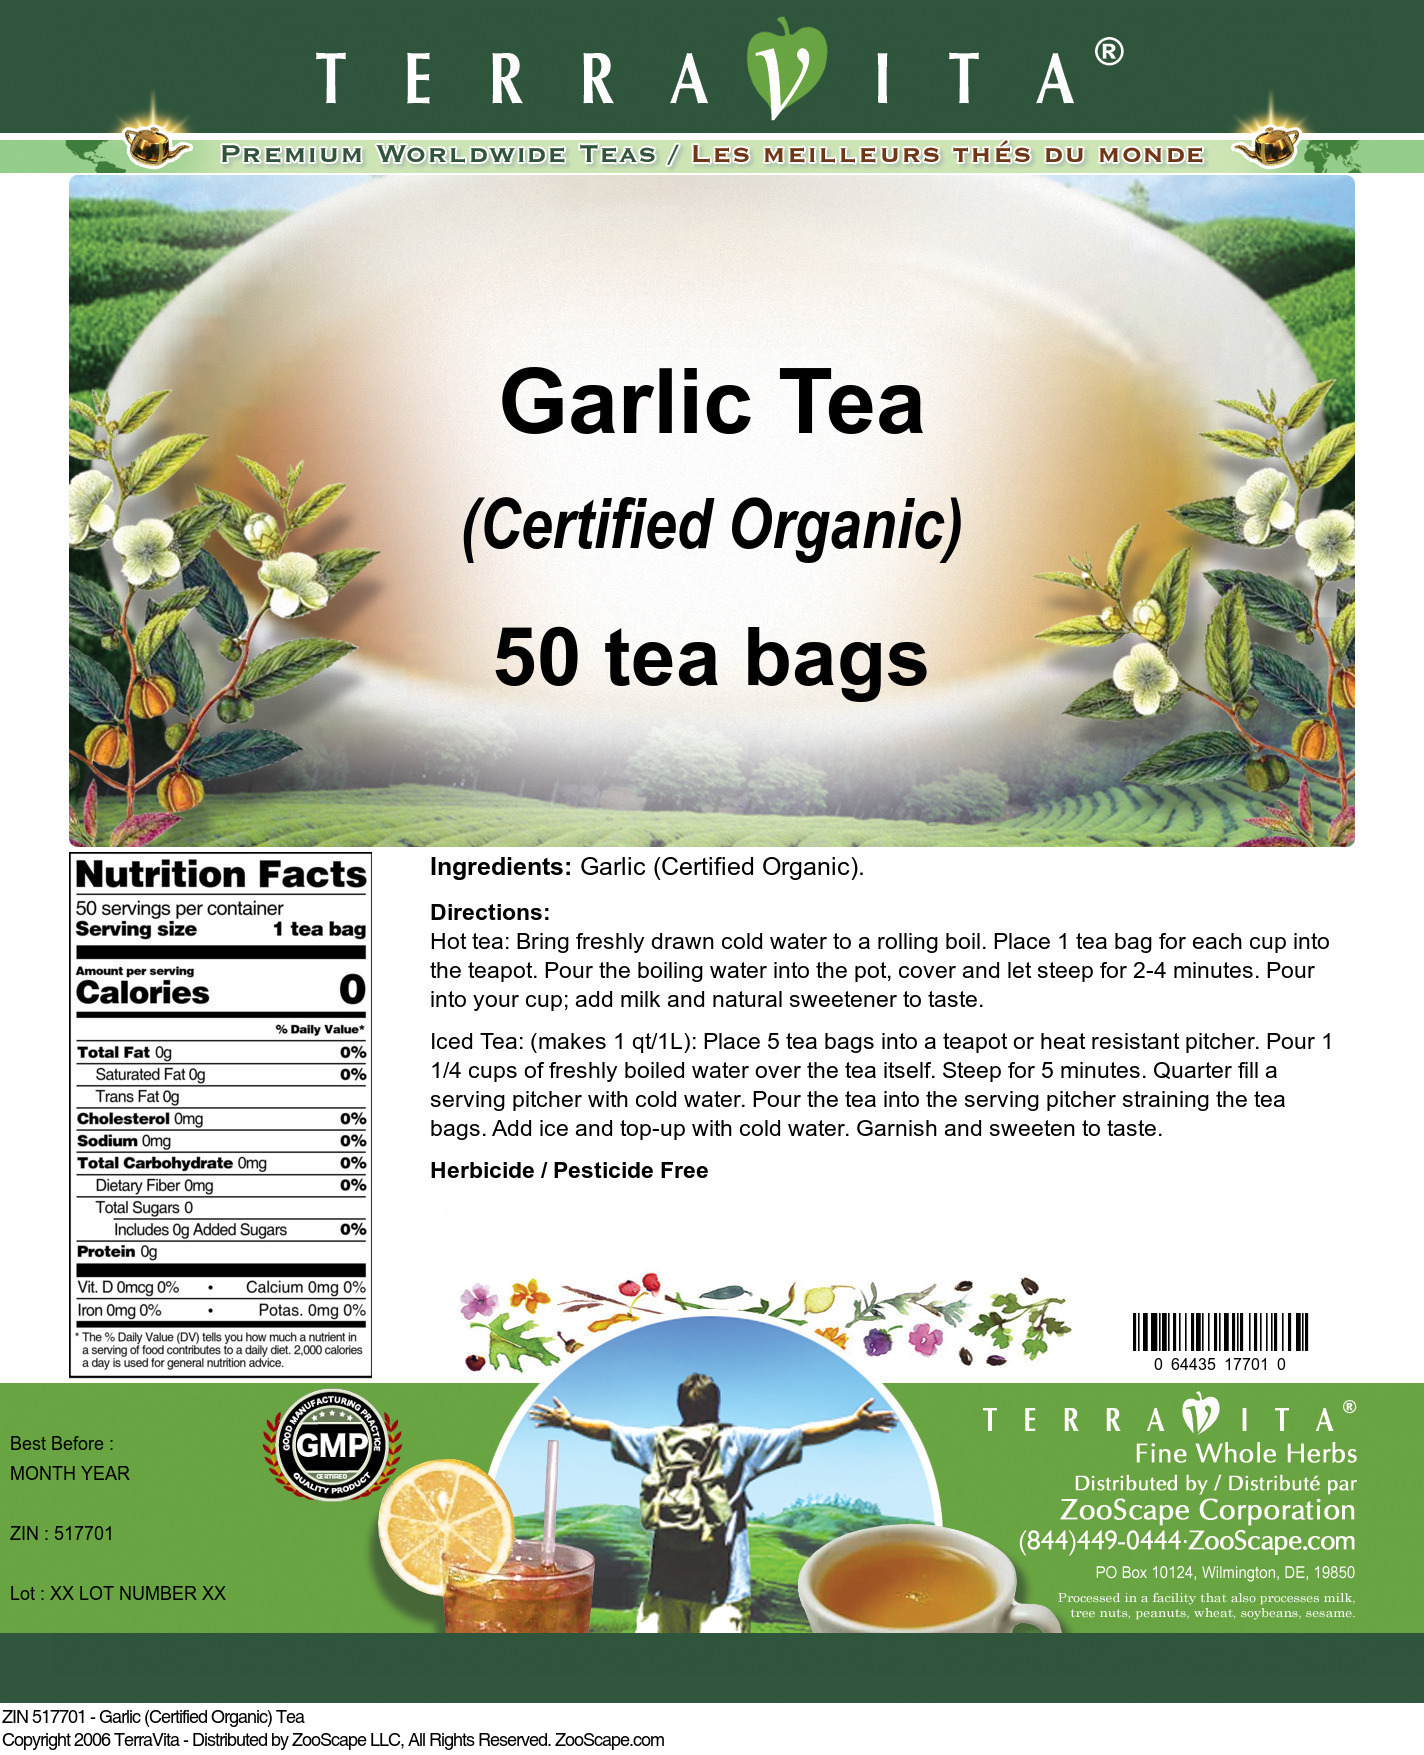 Garlic (Certified Organic) Tea - Label